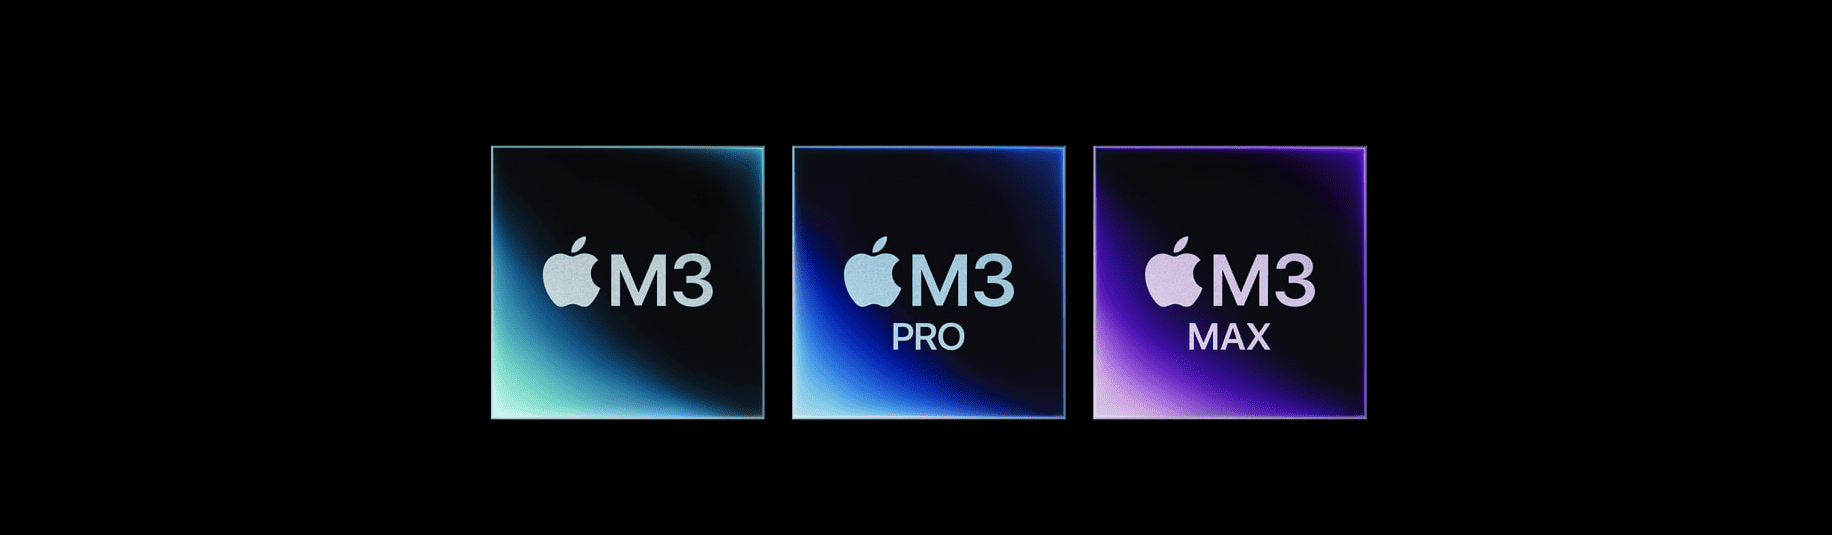 Apple M3 Chip Line